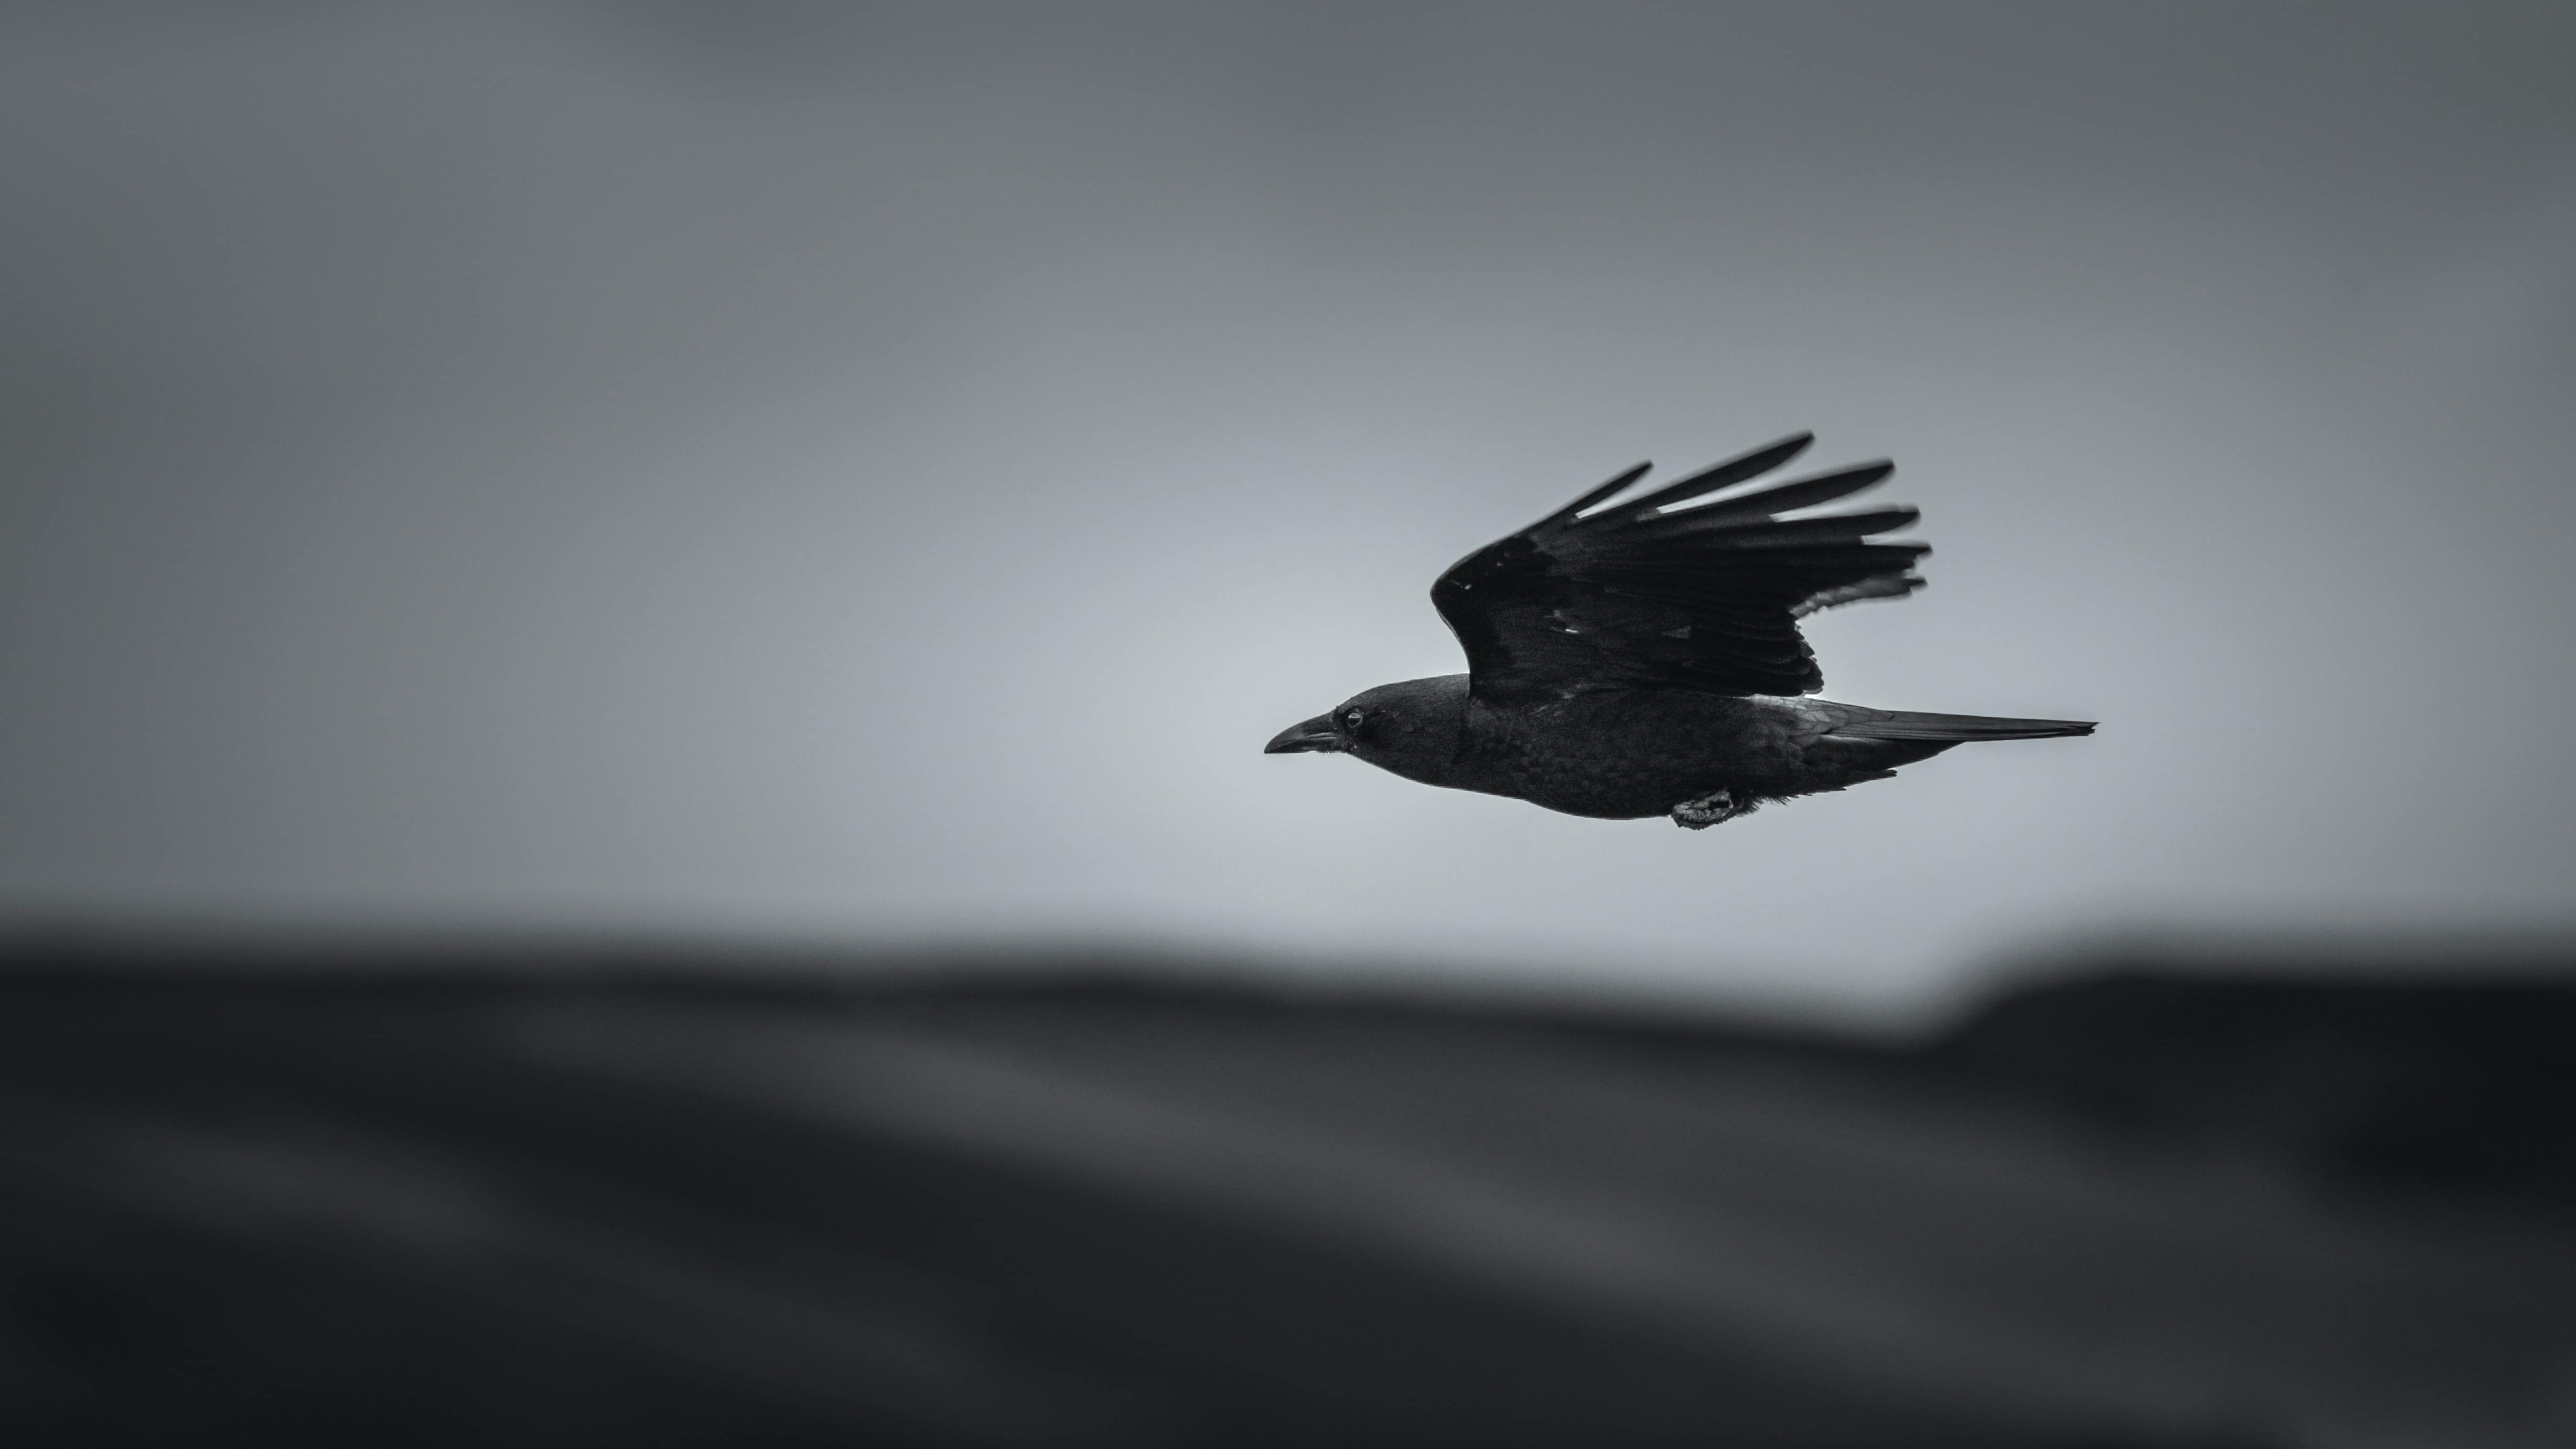 crows symbolize spiritually